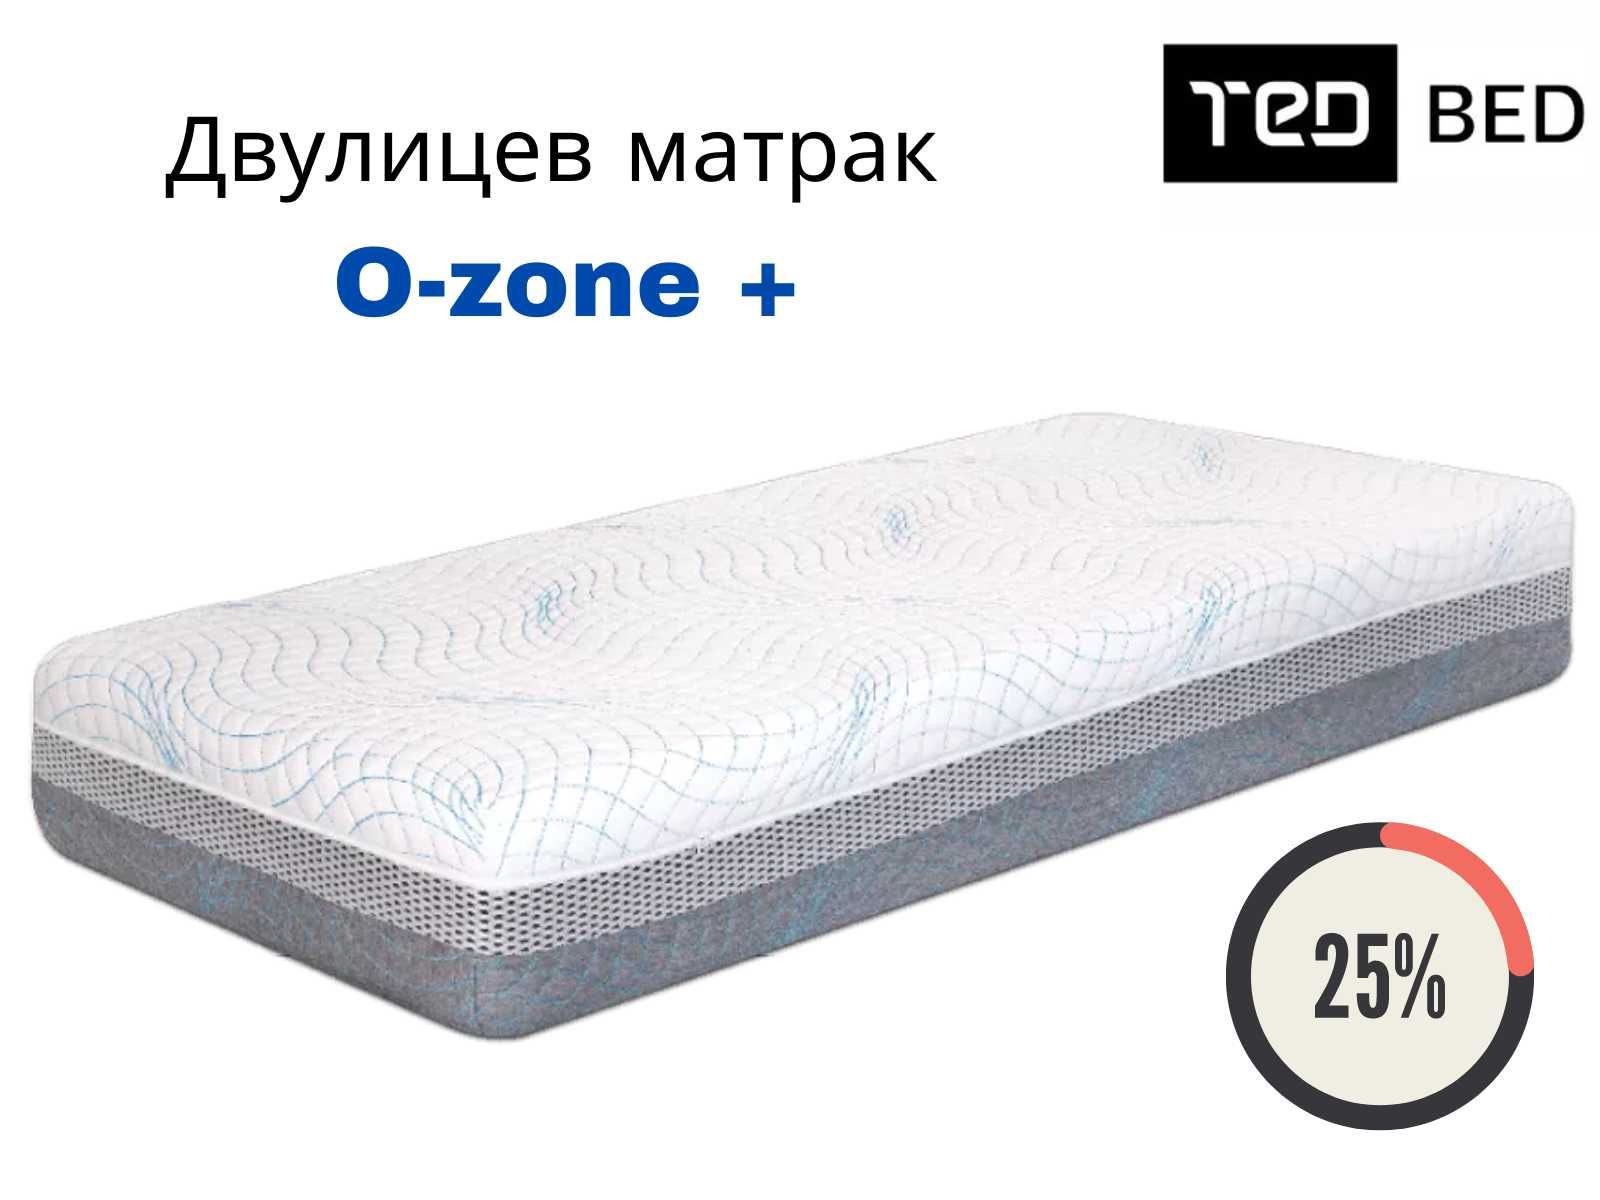 Двулицев матрак O-zone + ТЕД Sleep Genesis -25% за месец Юни + Подарък